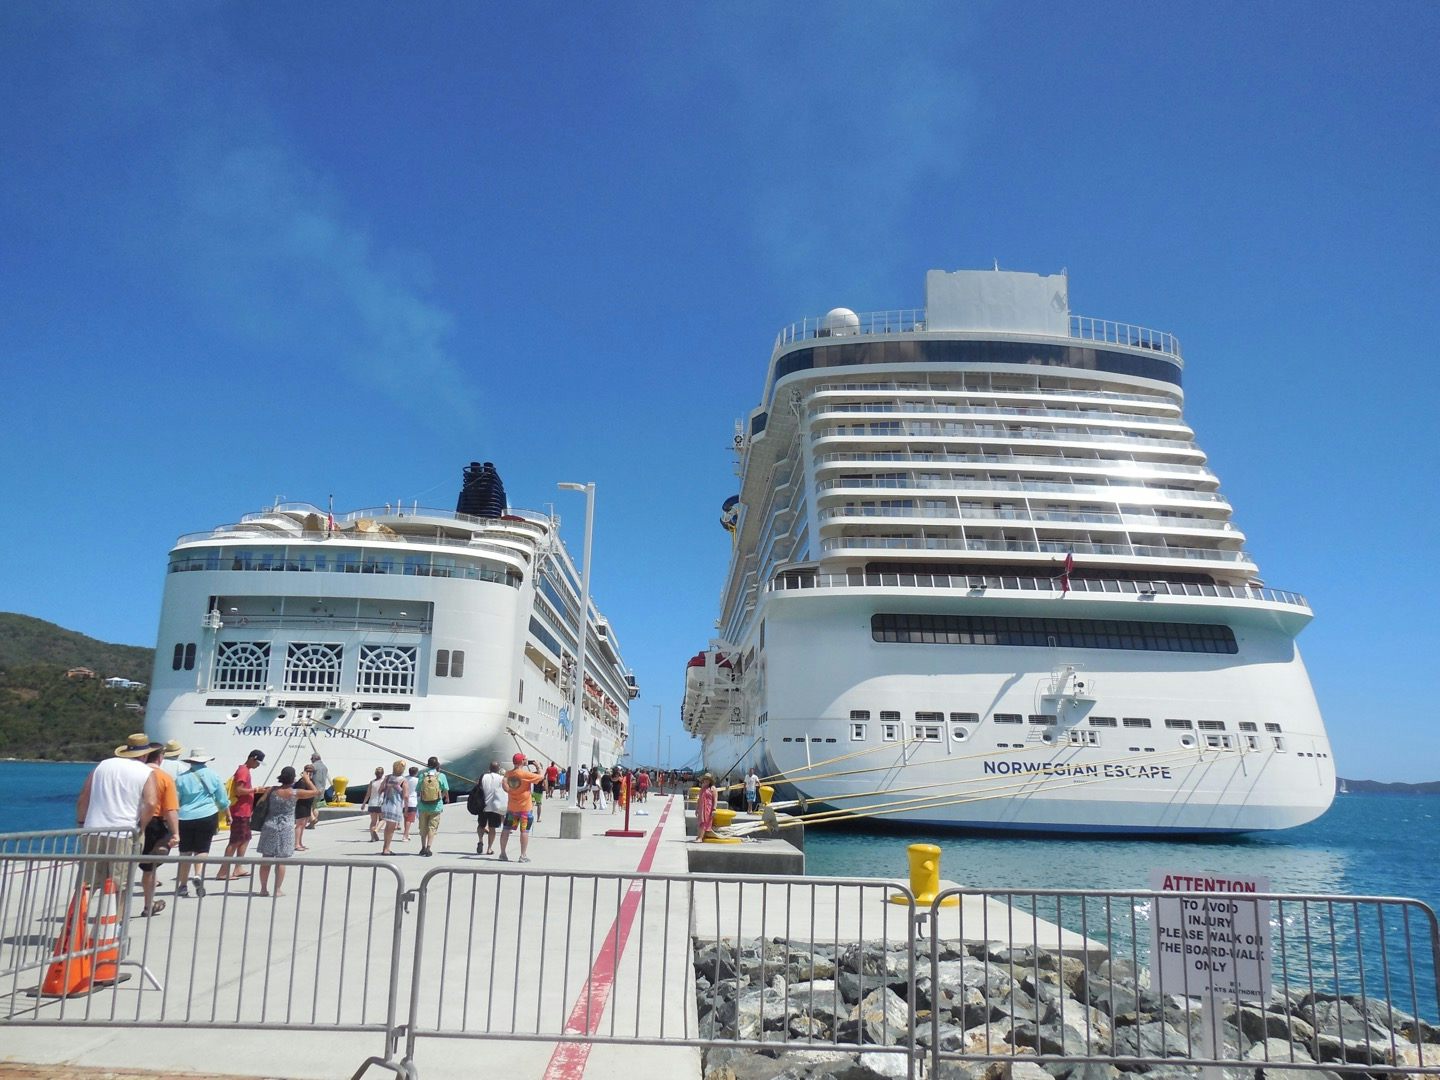 Escape docked in Tortola